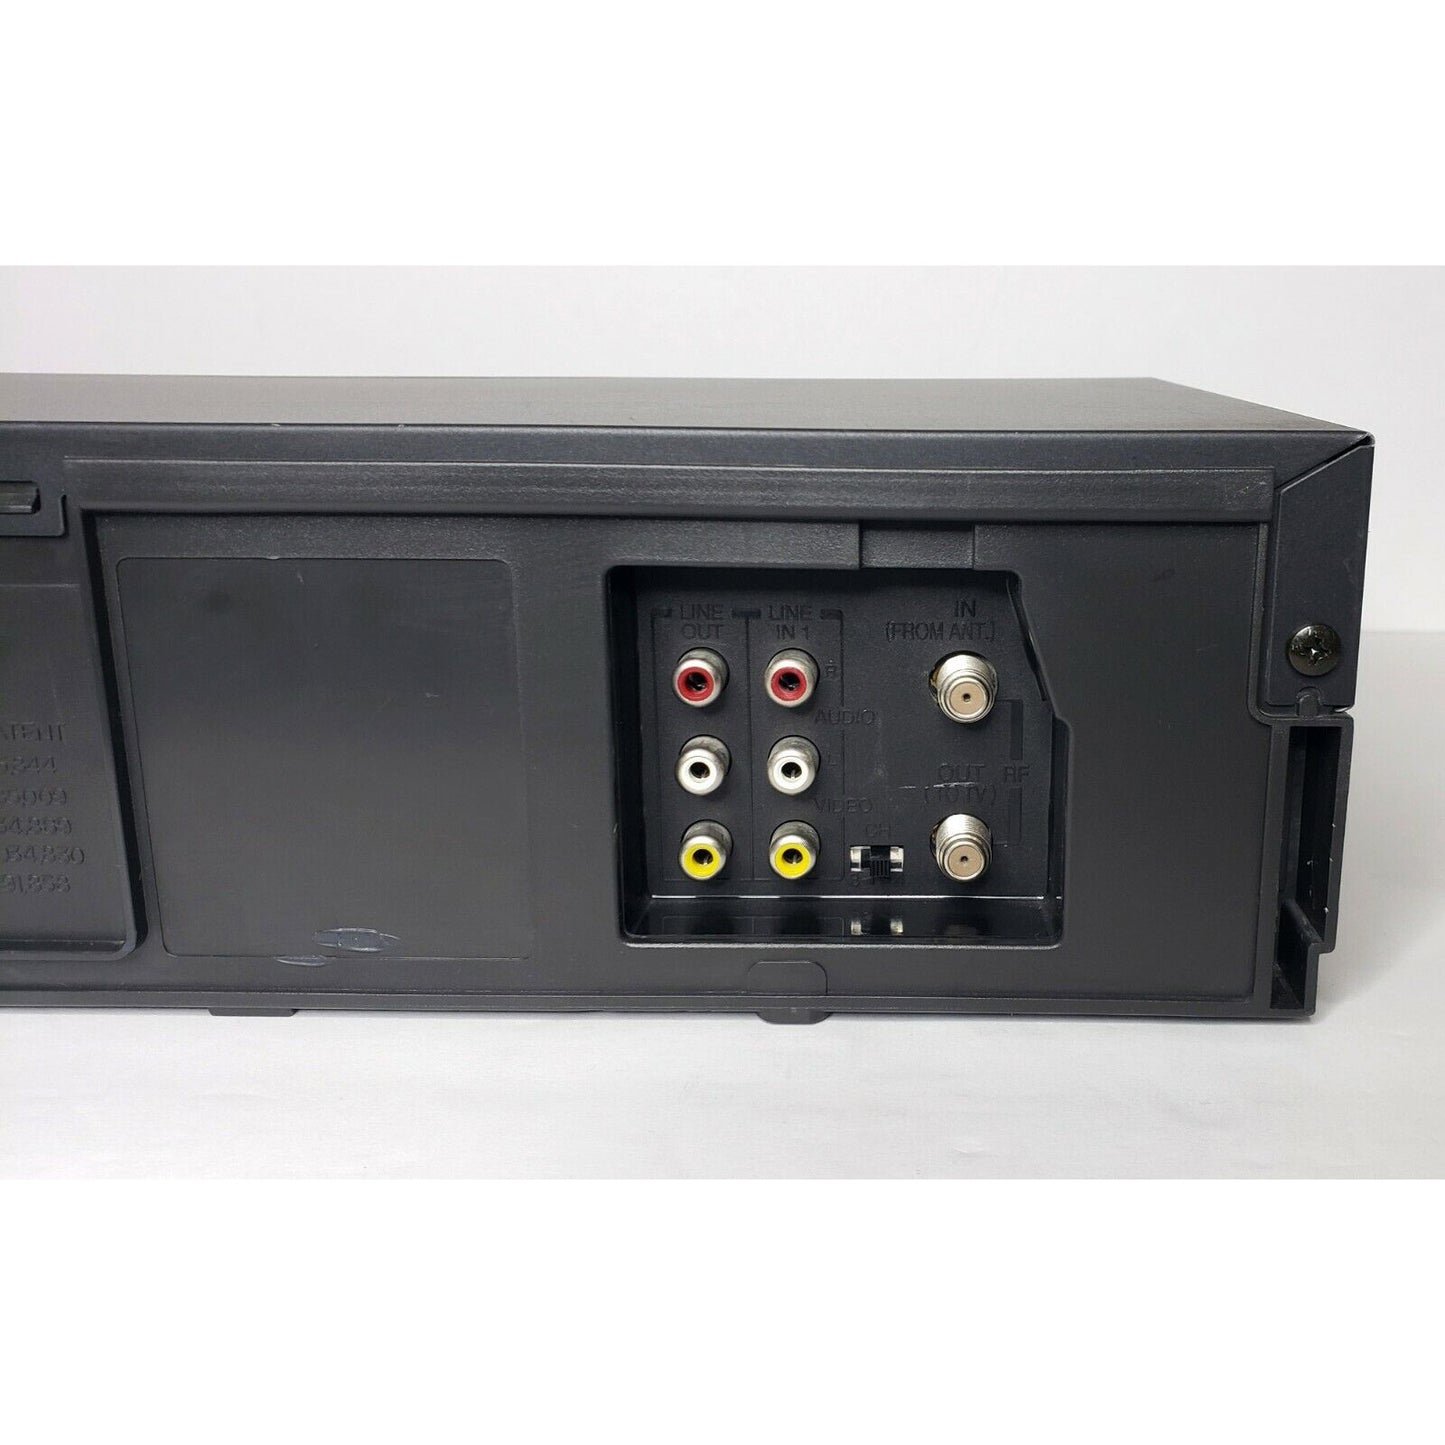 Toshiba W-627 VCR, 4-Head Hi-Fi Stereo